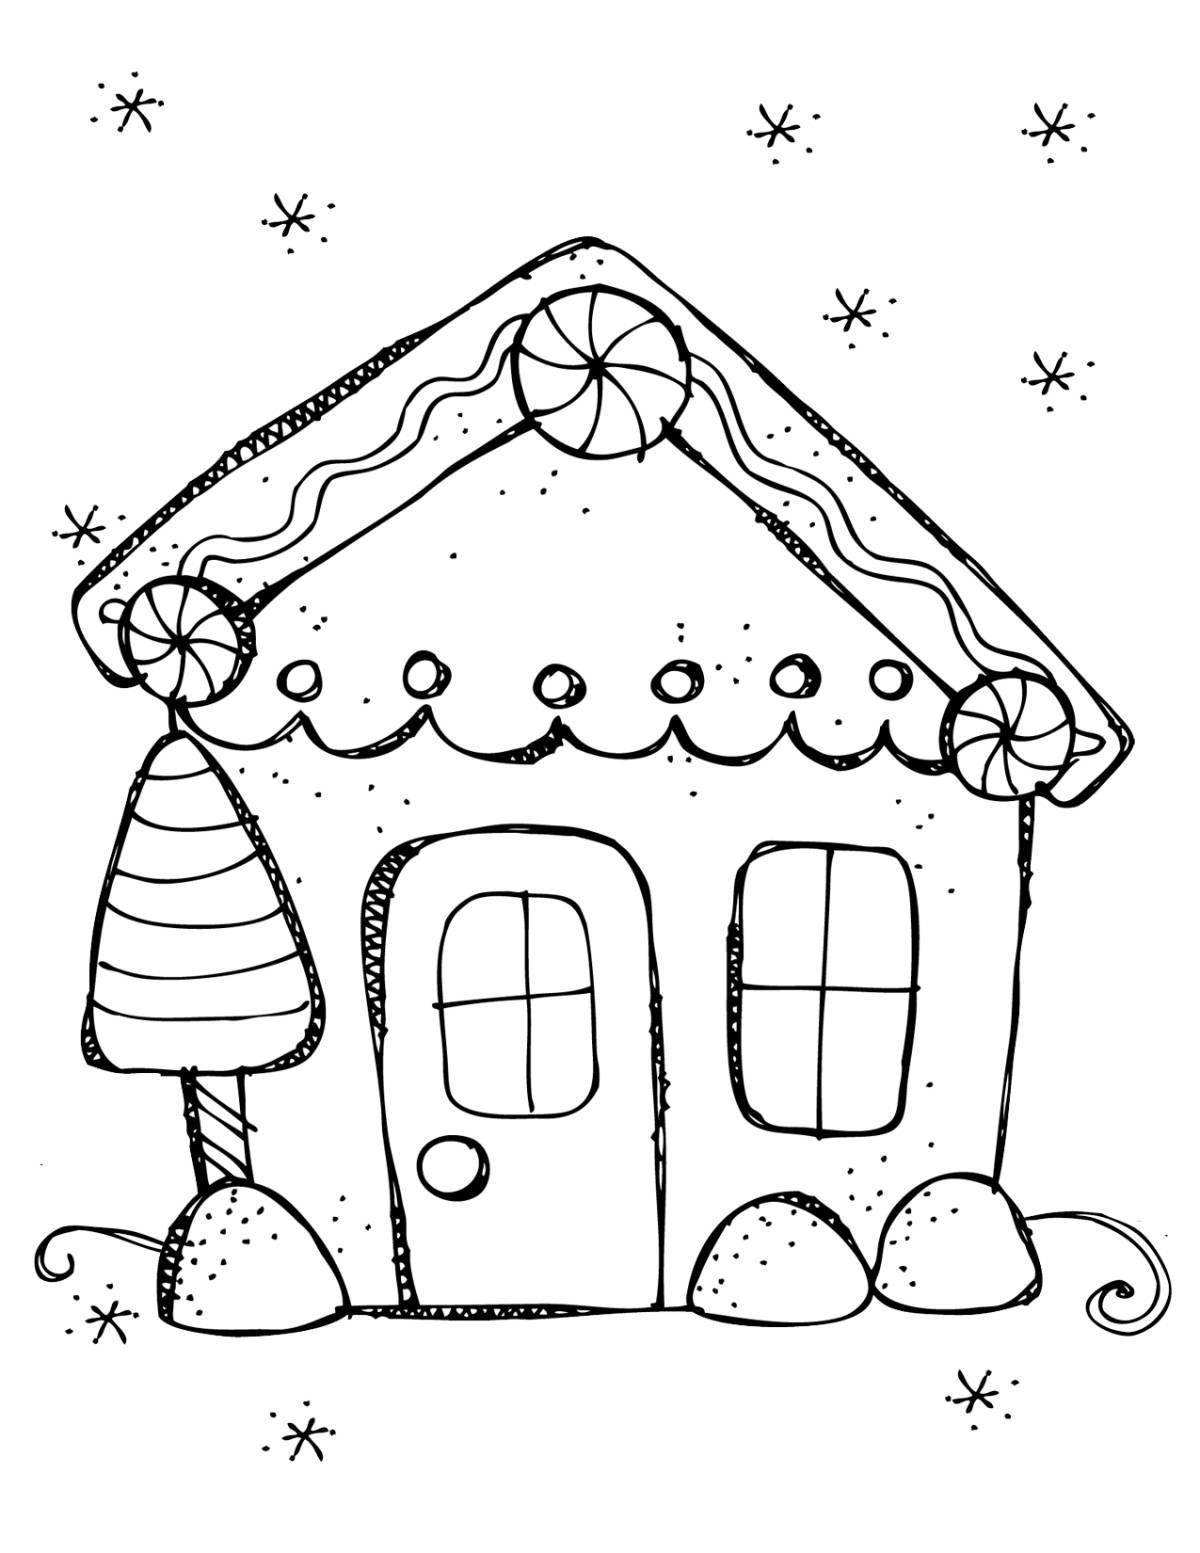 Adorable Christmas gingerbread house coloring book